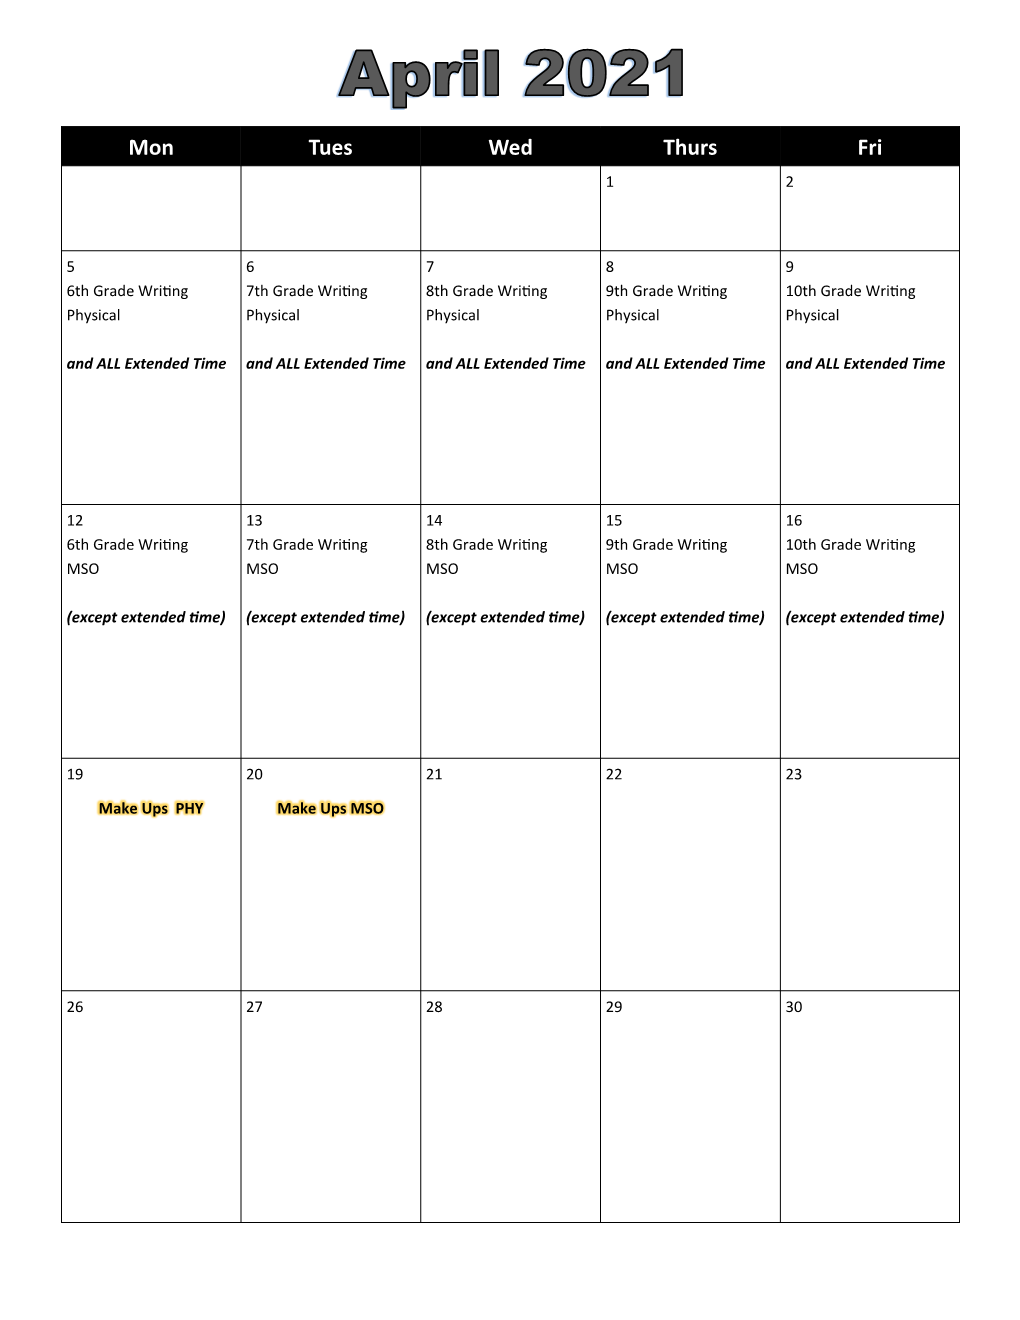 April 2021 Testing Calendar